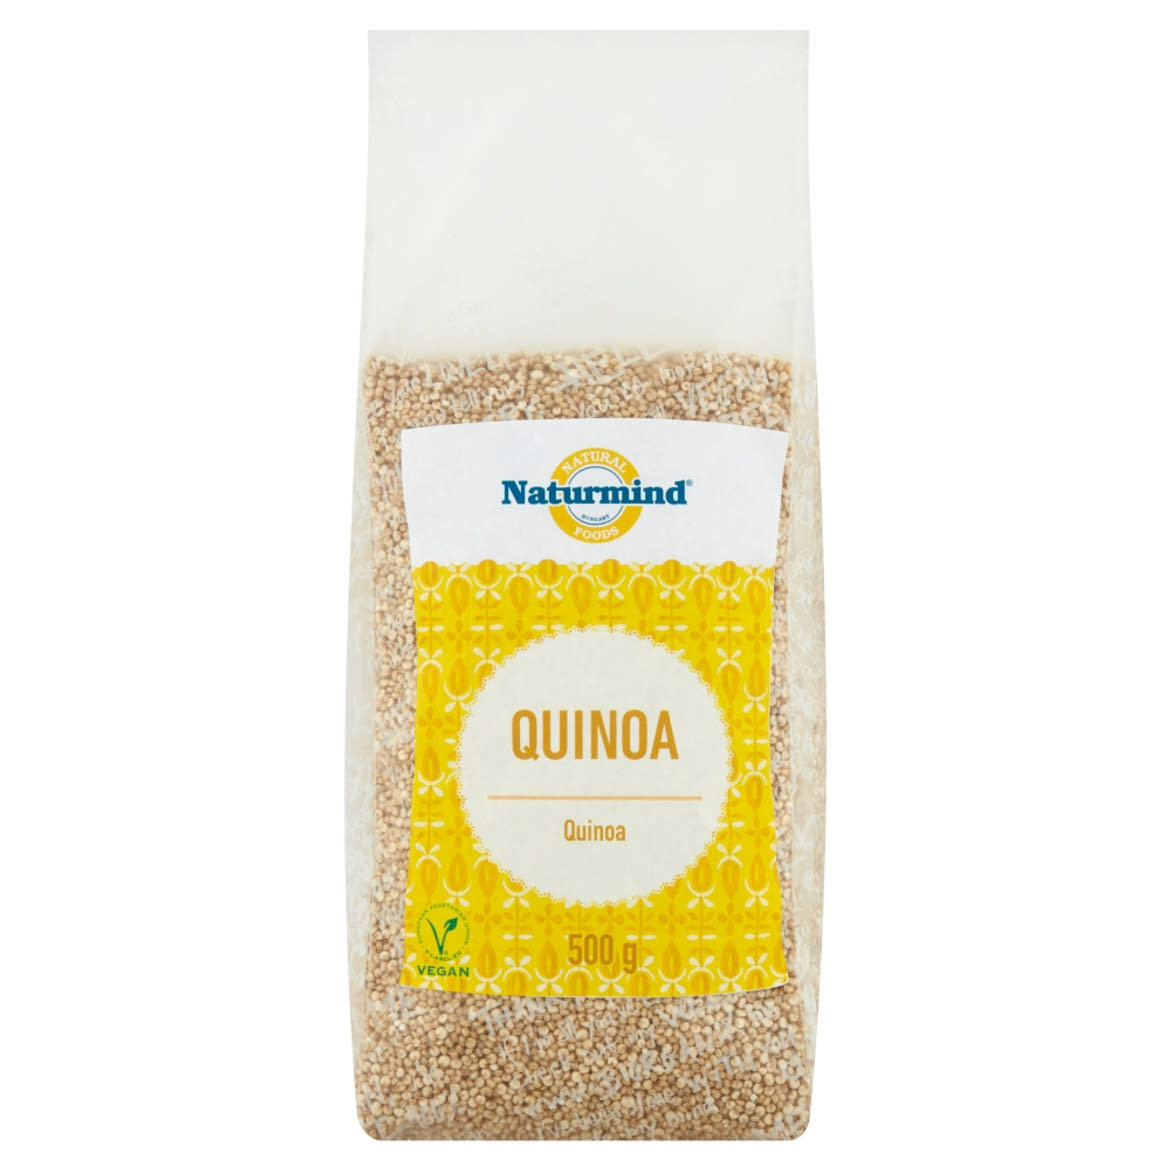 Naturmind quinoa